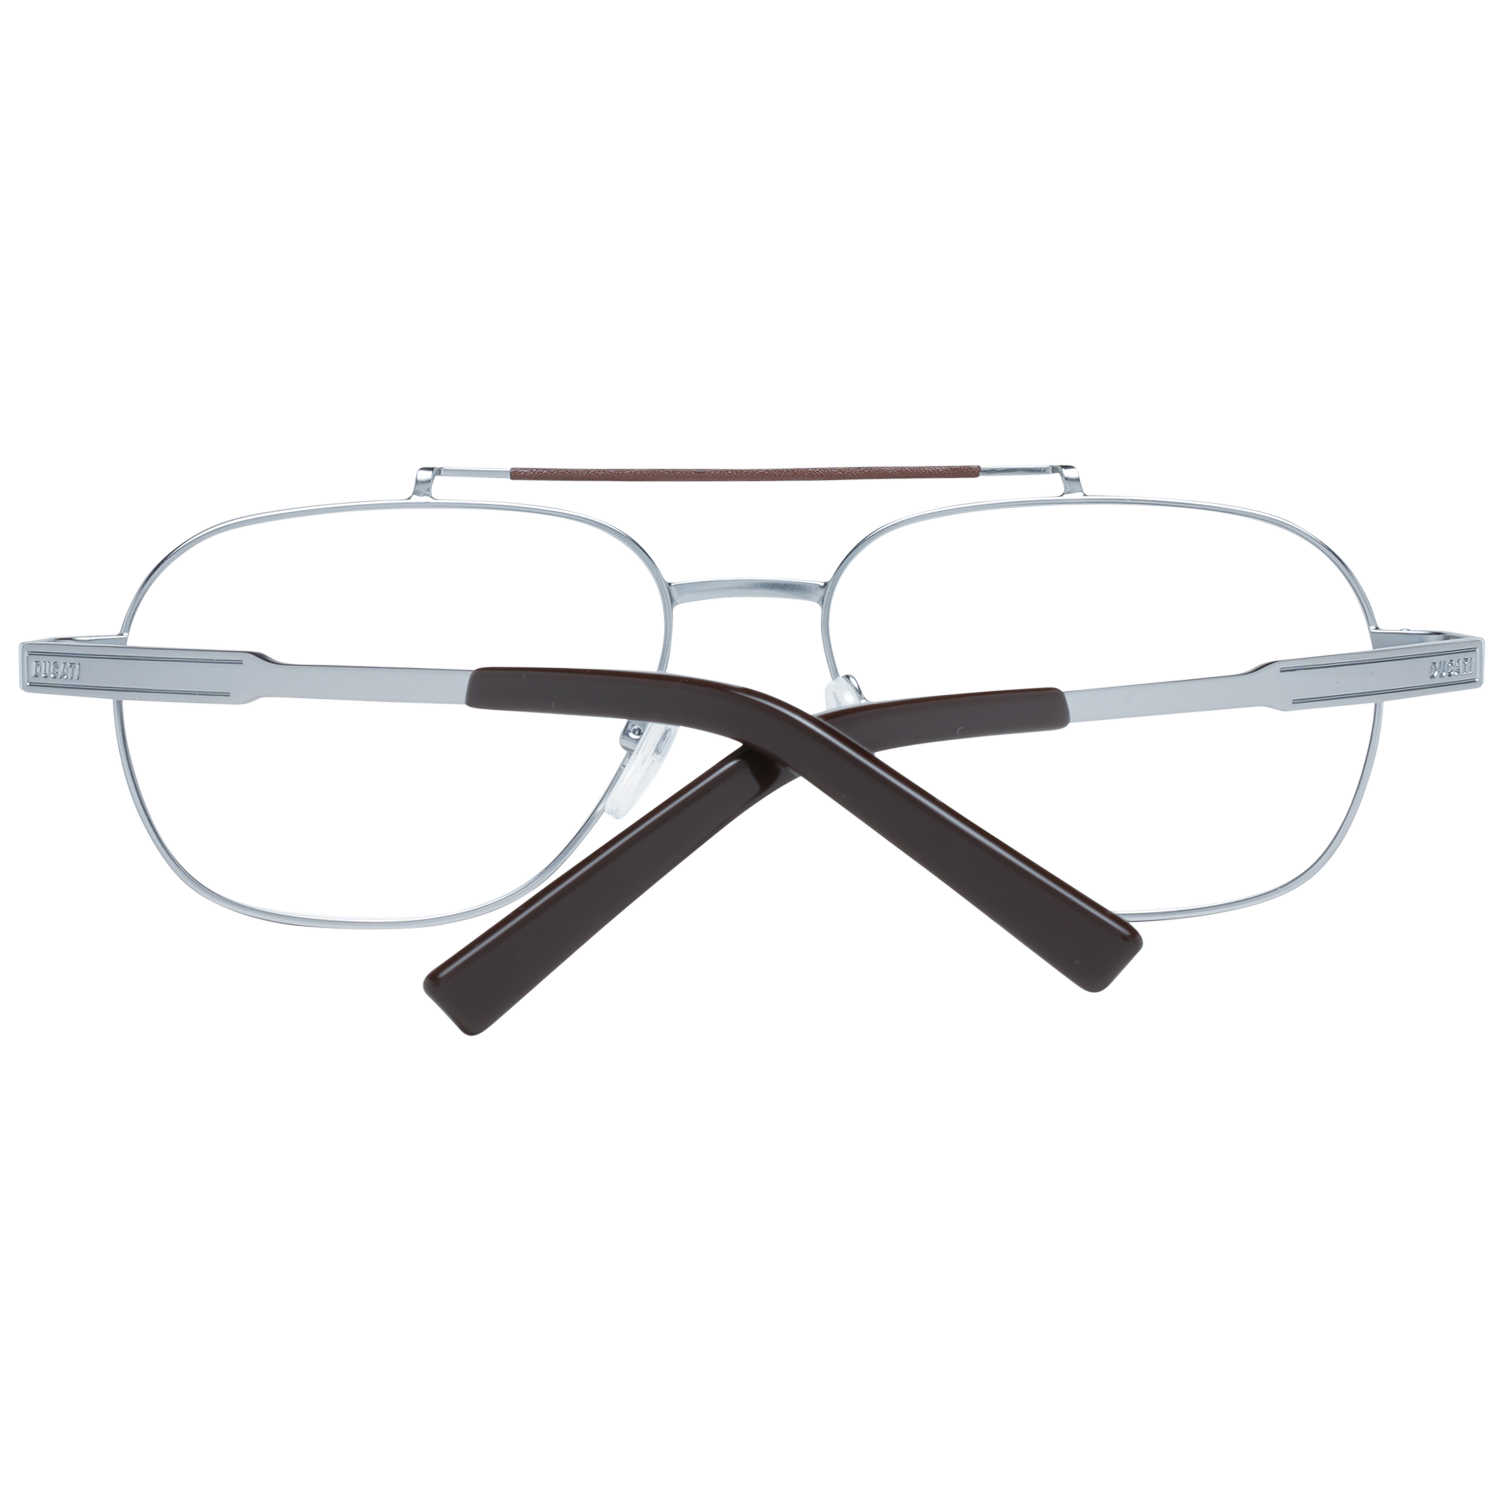 Ducati Frames Ducati Optical Frame DA3018 934 56 Eyeglasses Eyewear UK USA Australia 